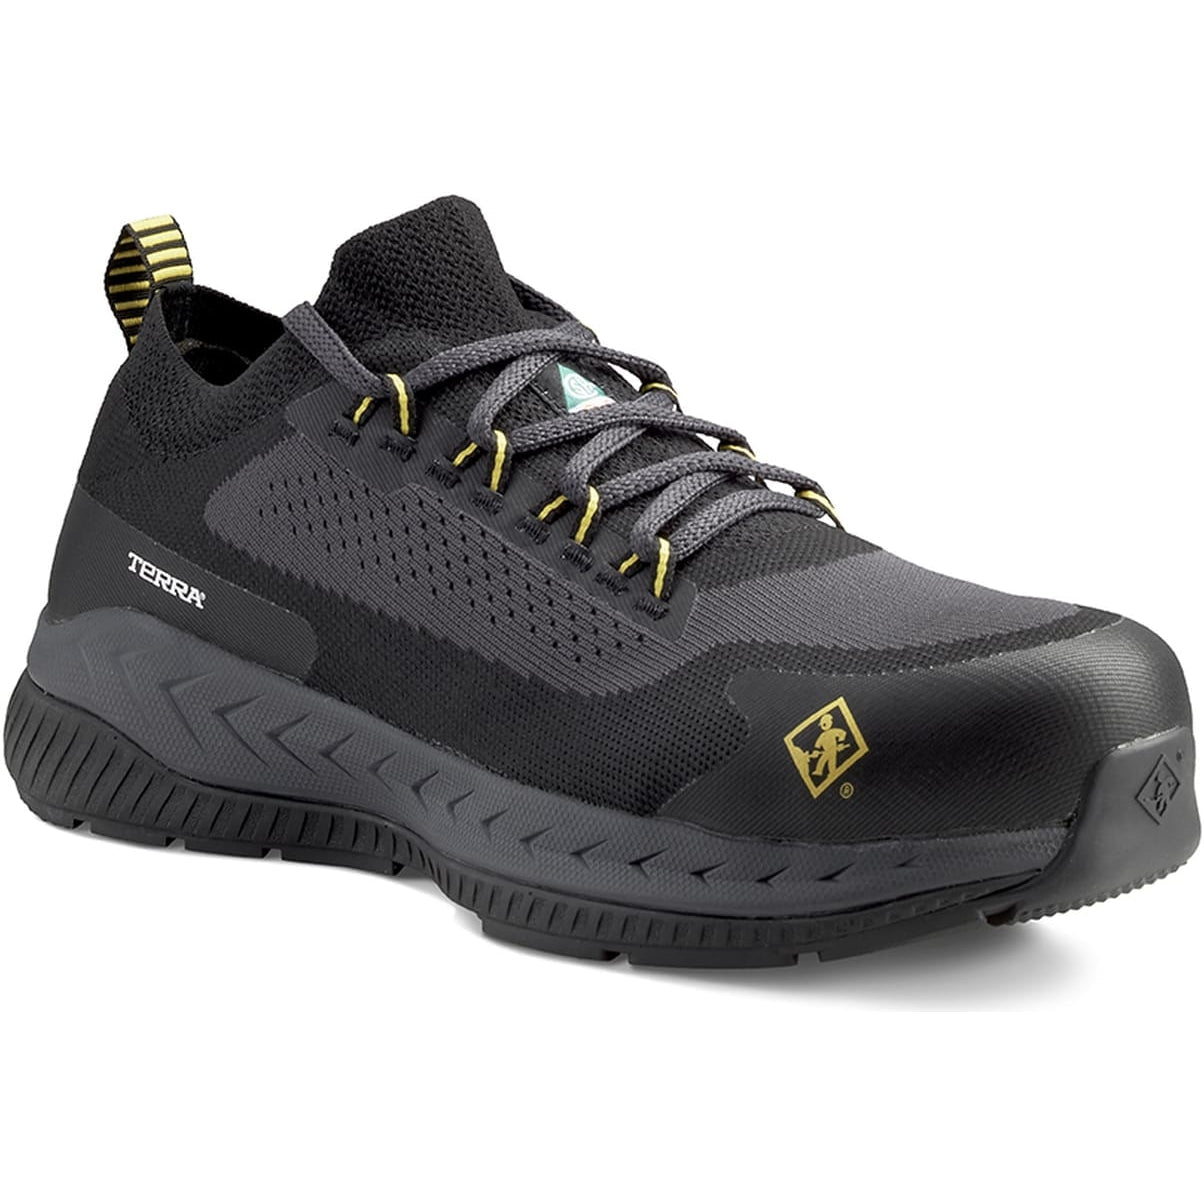 Terra Men's Eclipse Comp Toe Slip Resist Athletic Work Shoe -Black- 4T8NBY 7 / Wide / Black - Overlook Boots